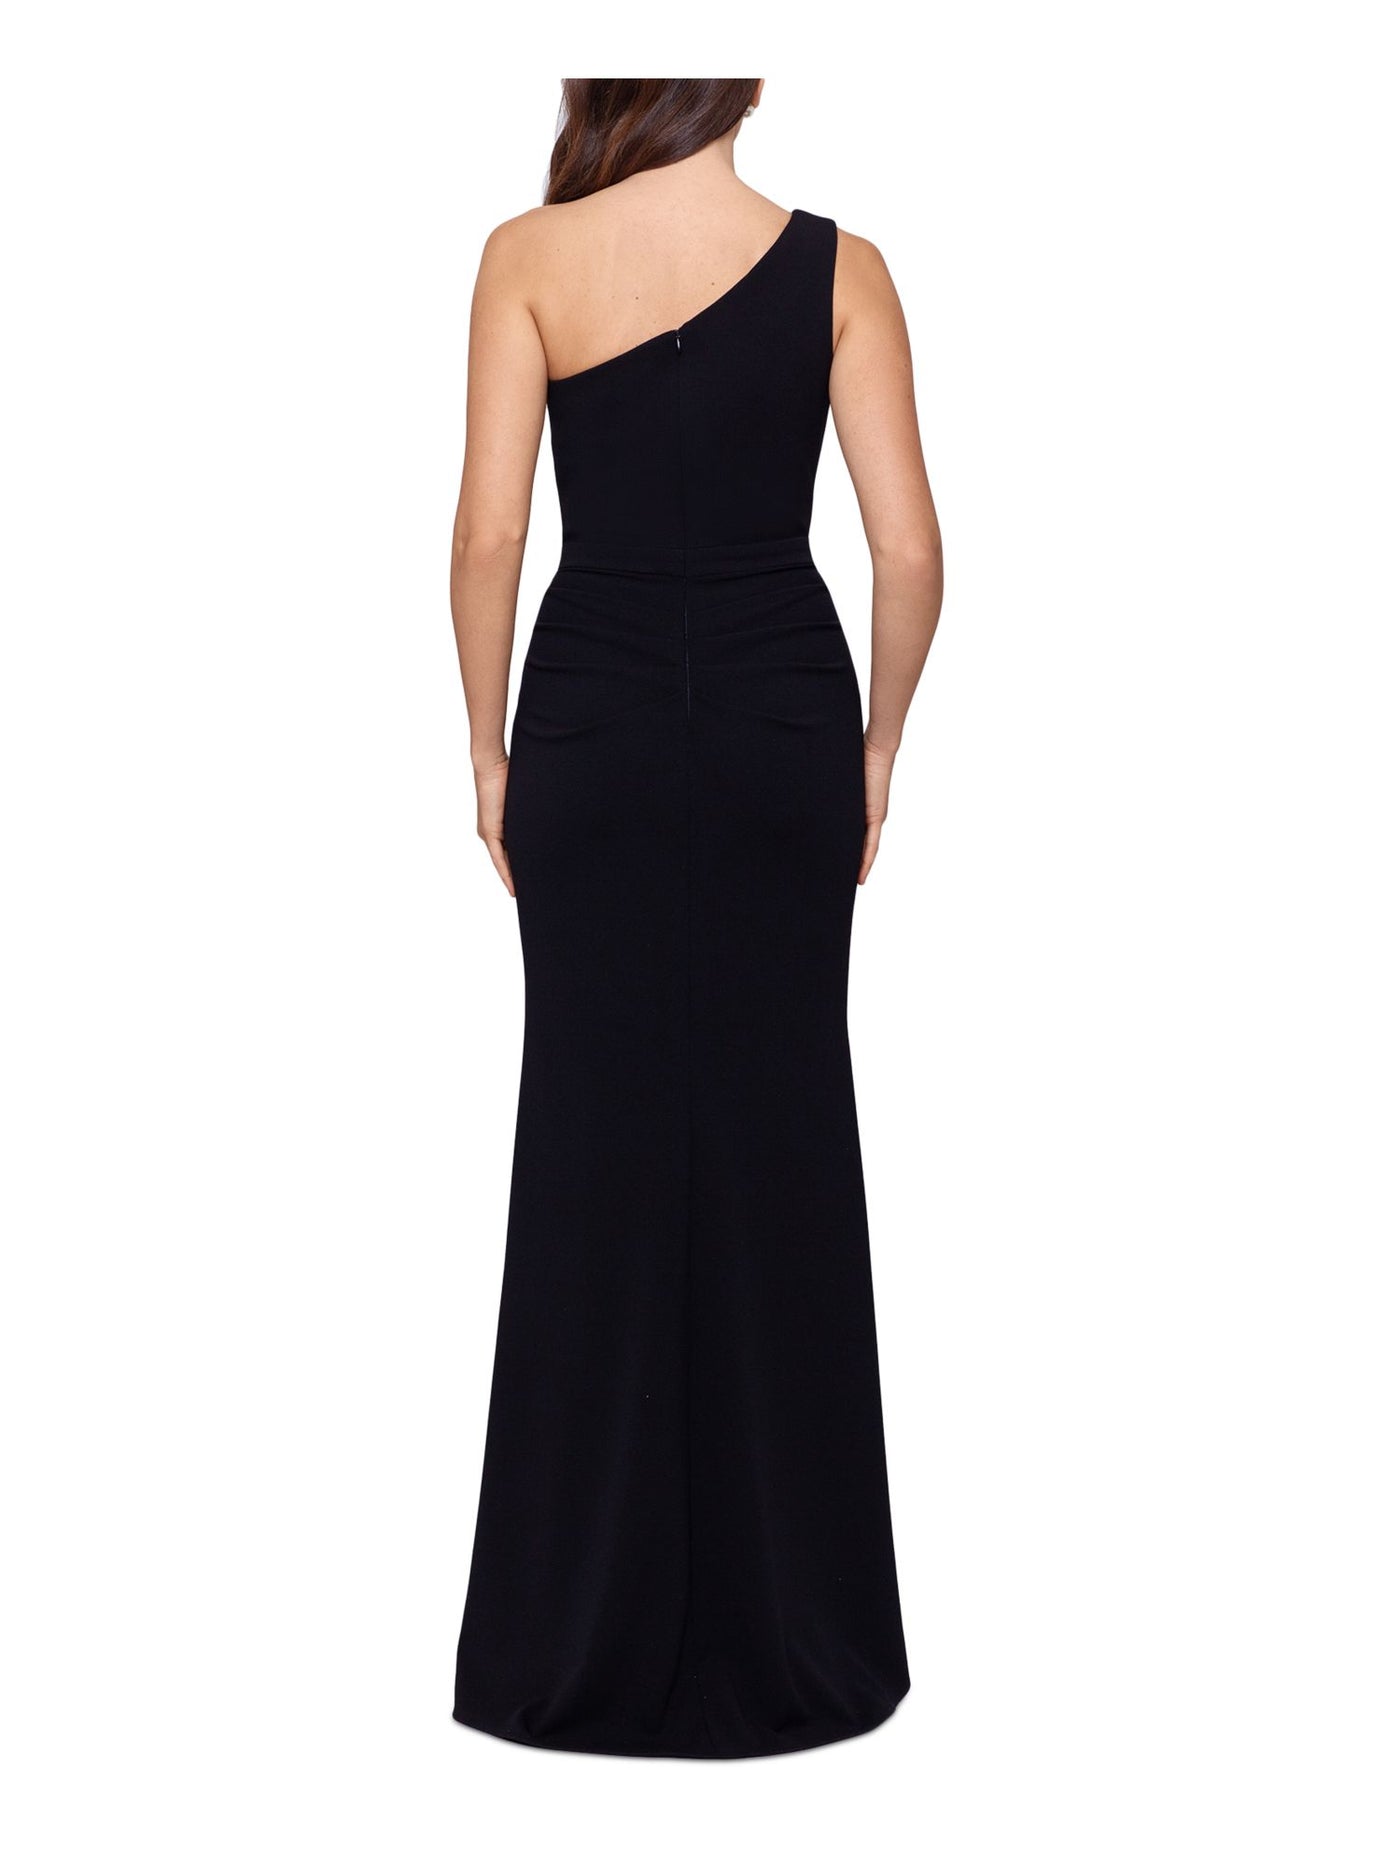 XSCAPE Womens Black Cut Out Zippered High Slit Fitted Scuba Crepe Sleeveless Asymmetrical Neckline Full-Length Evening Gown Dress 4